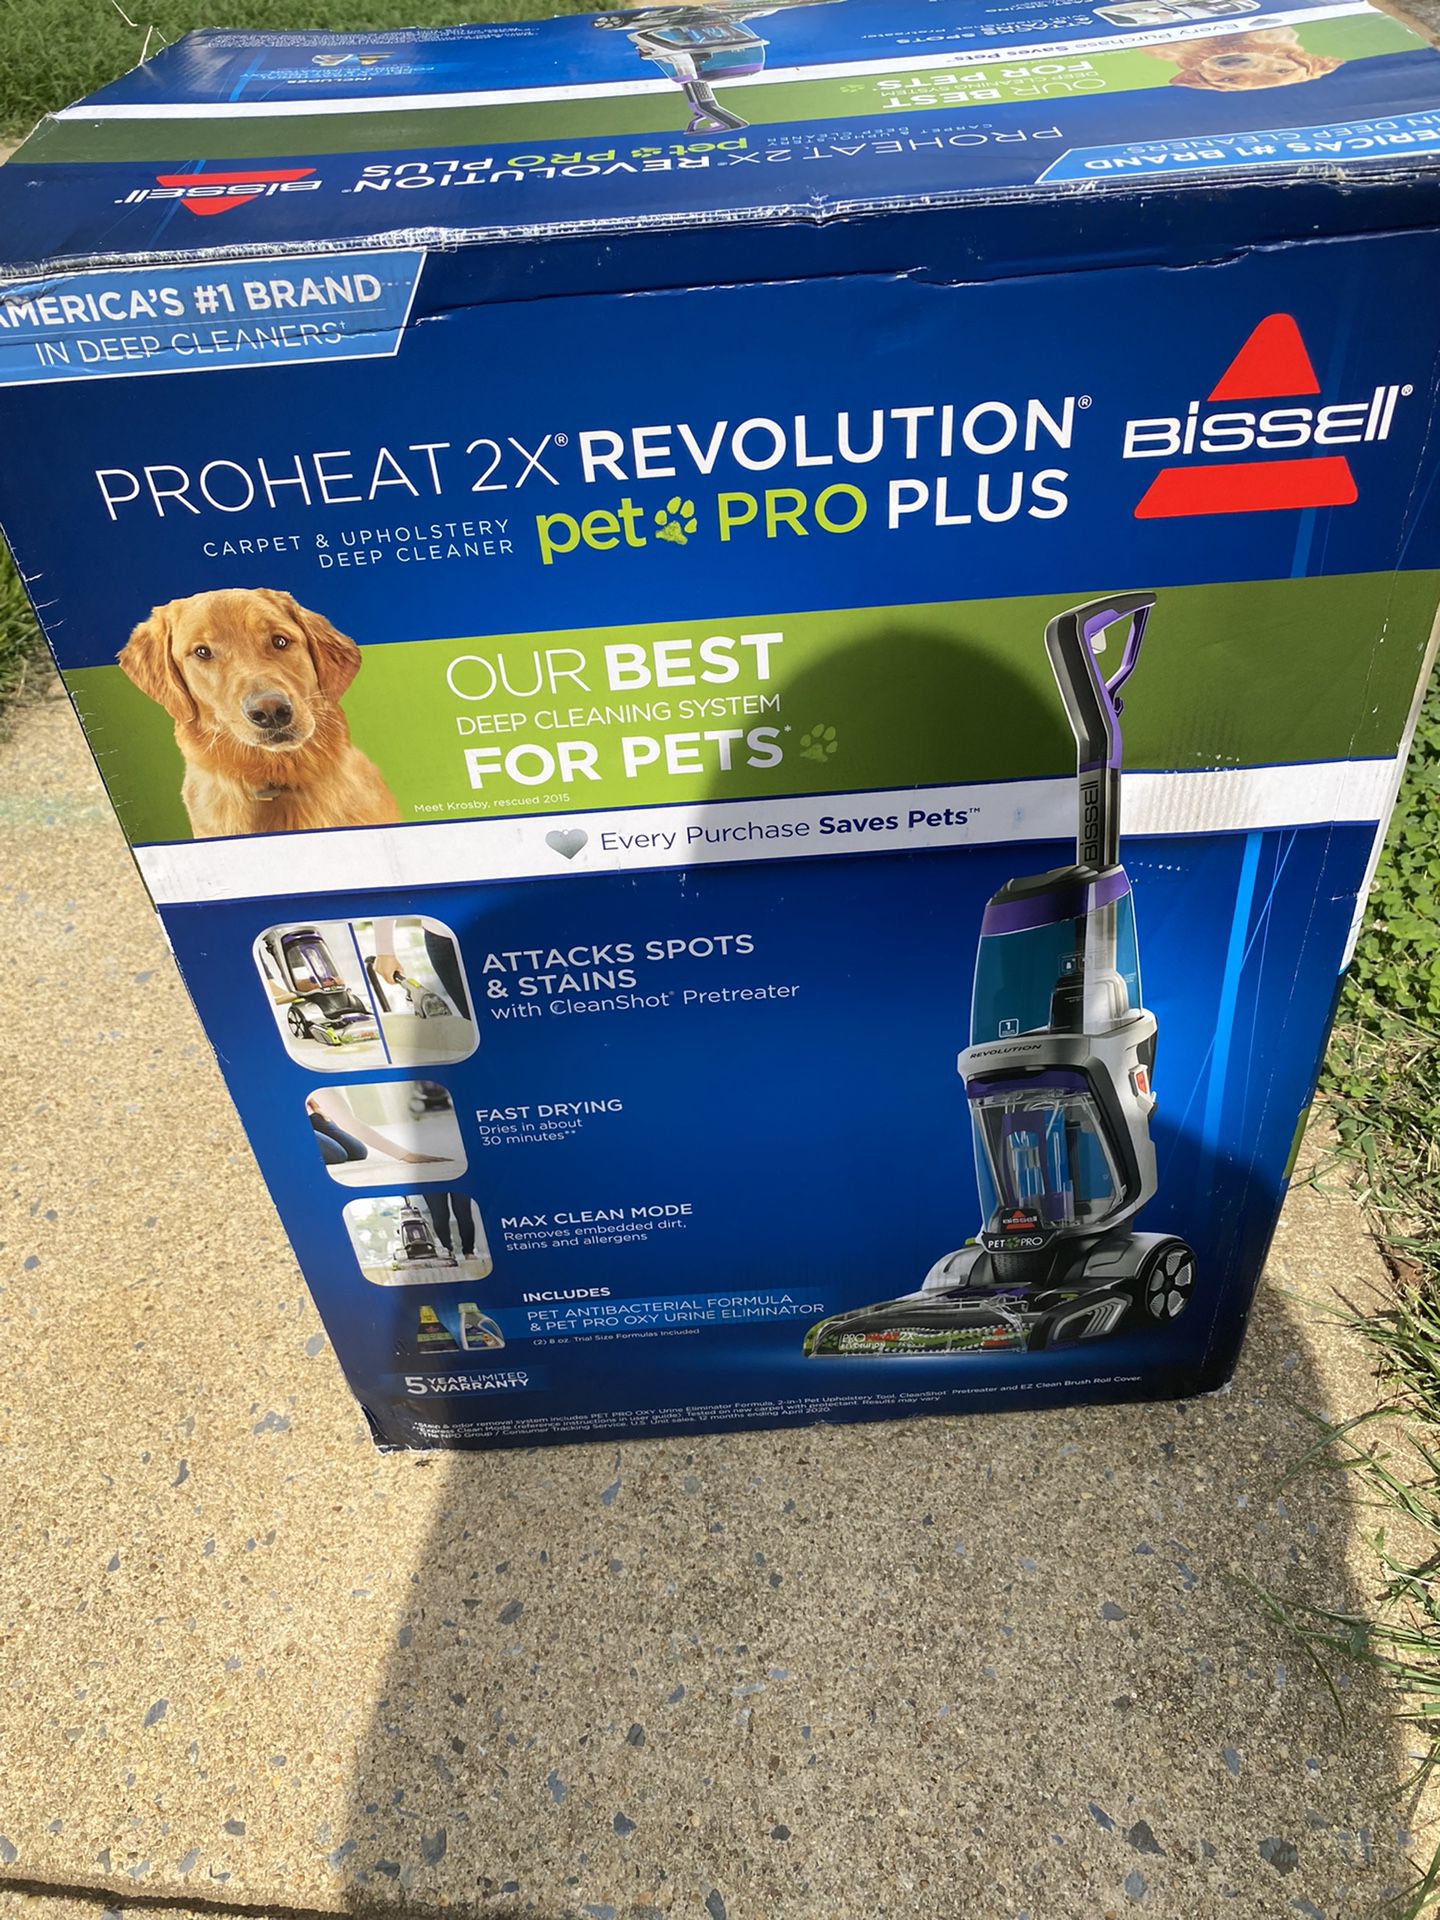 Preheat 2x Revolution Pet Pro Plus 